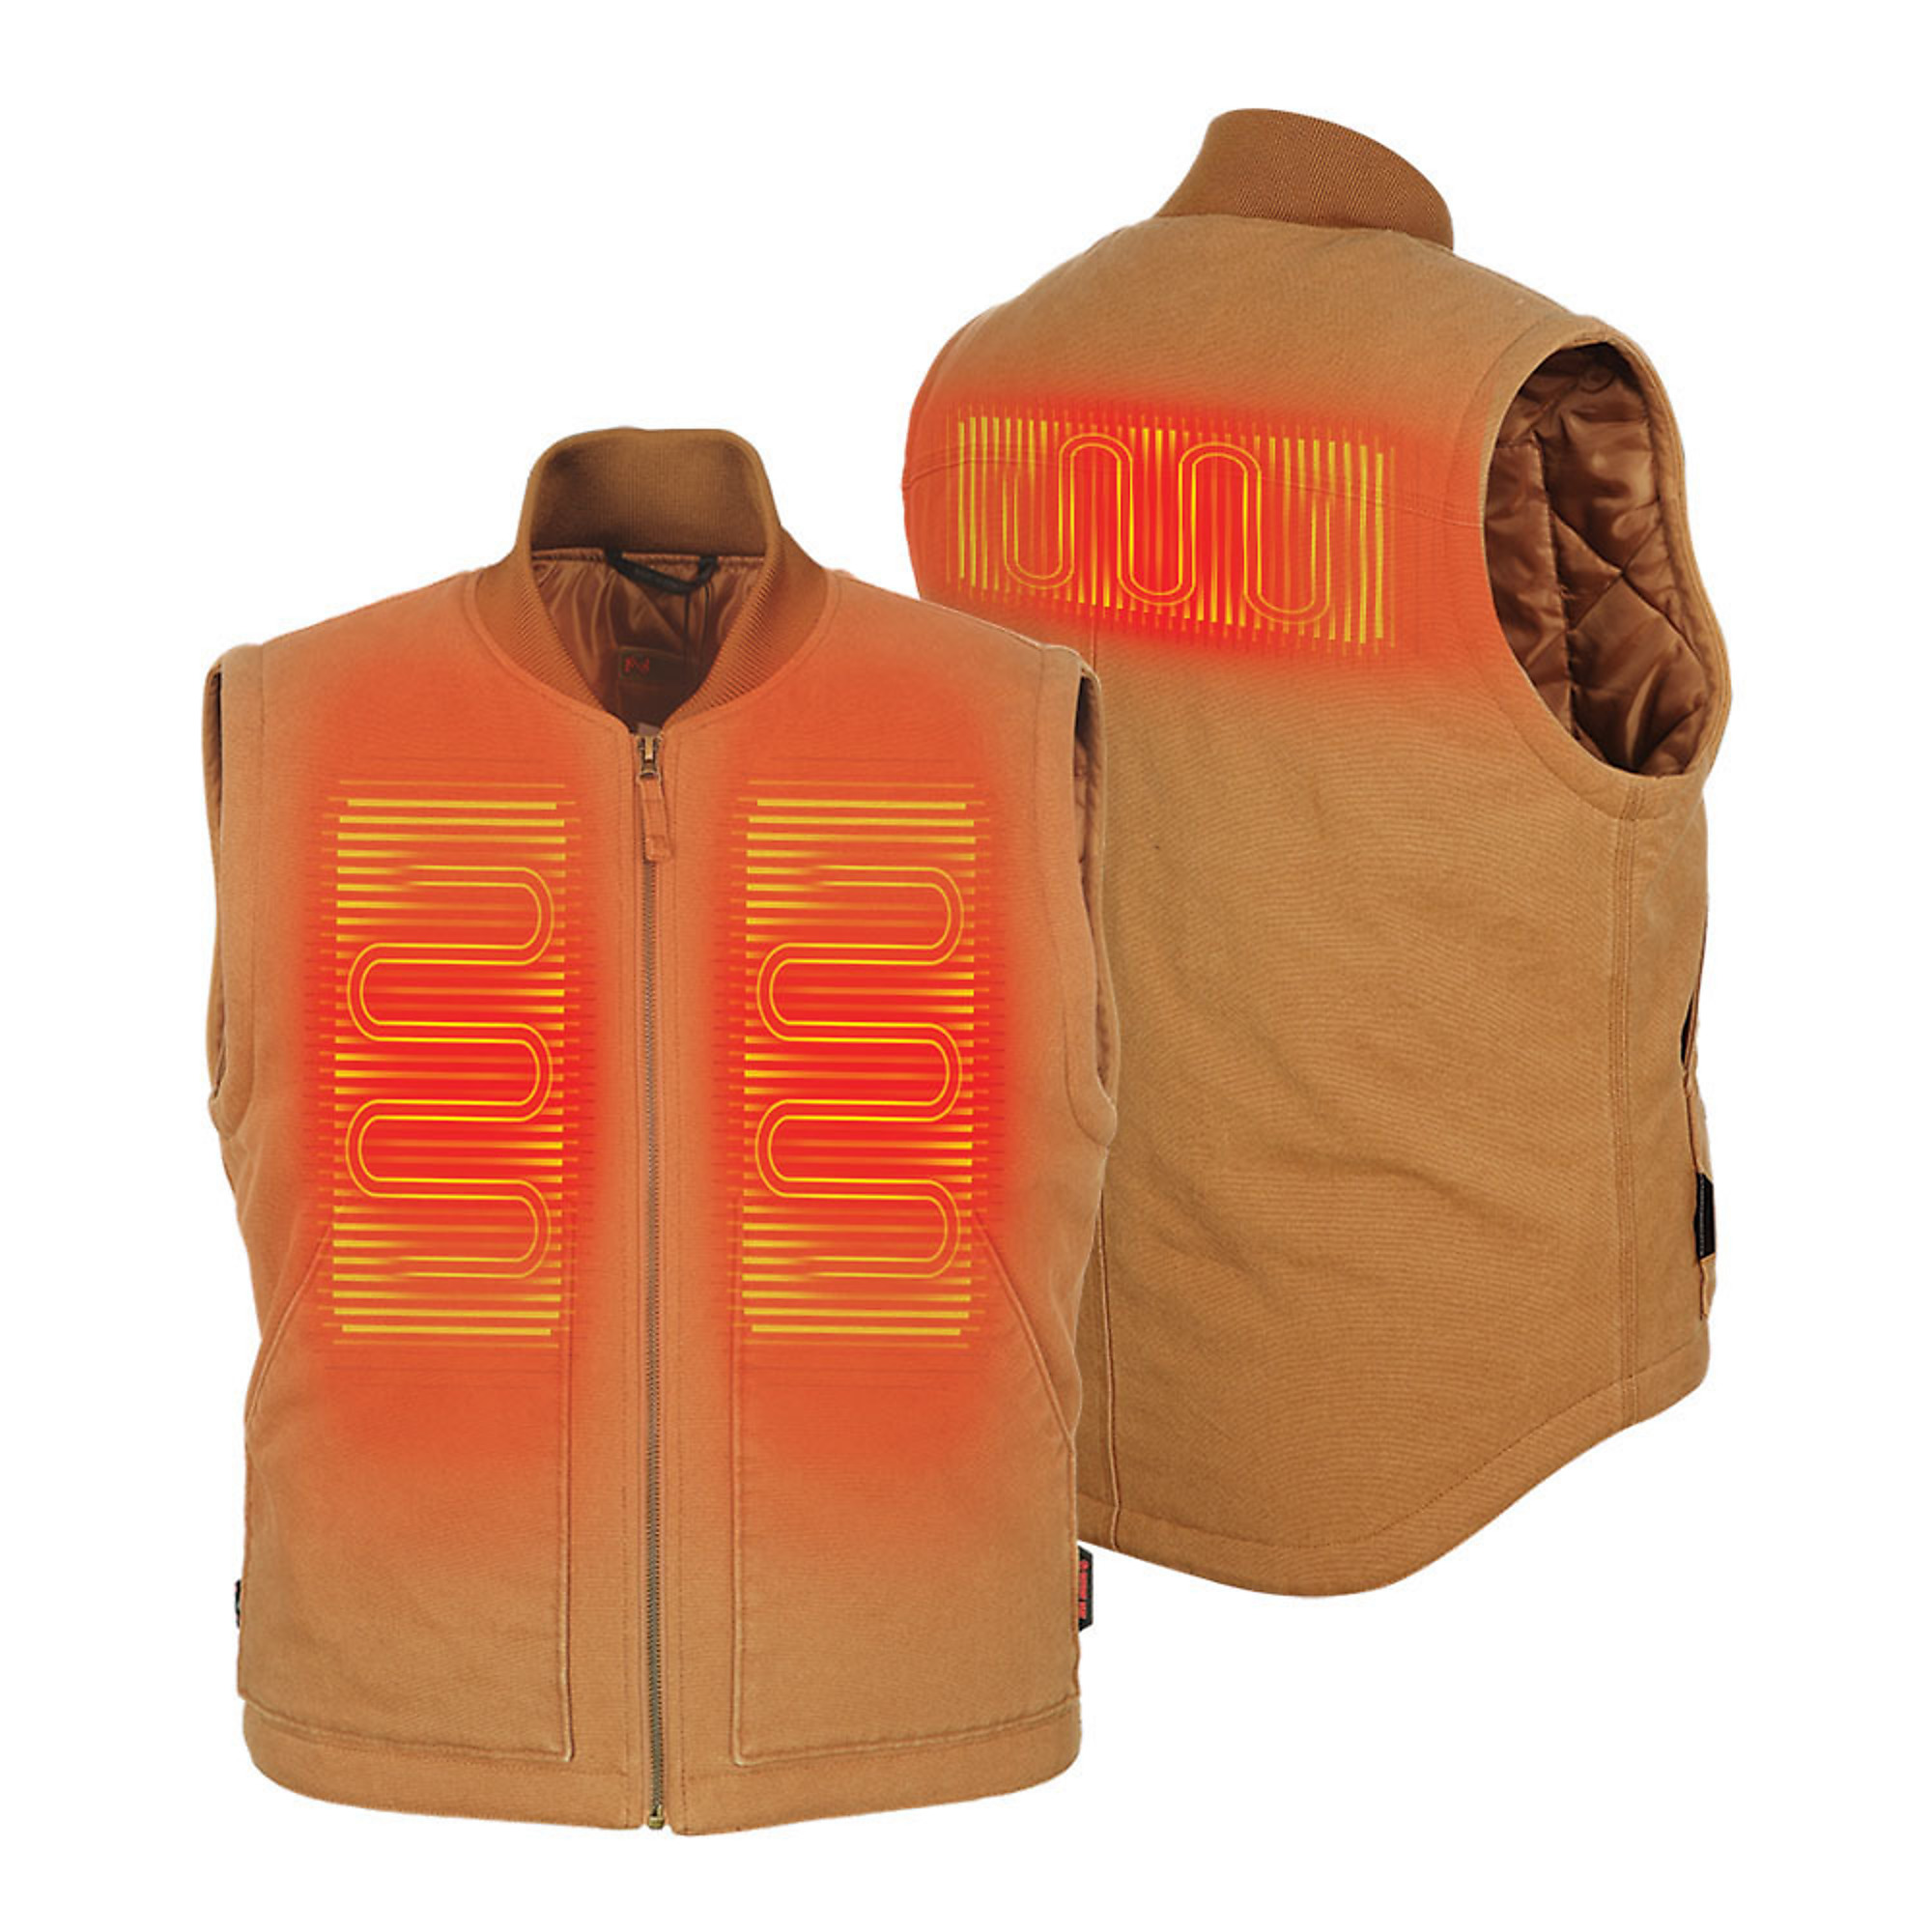 Fieldsheer, Men's Foreman 2.0 Vest with 7.4v Battery, Size S, Color Tan, Model MWMV15130221